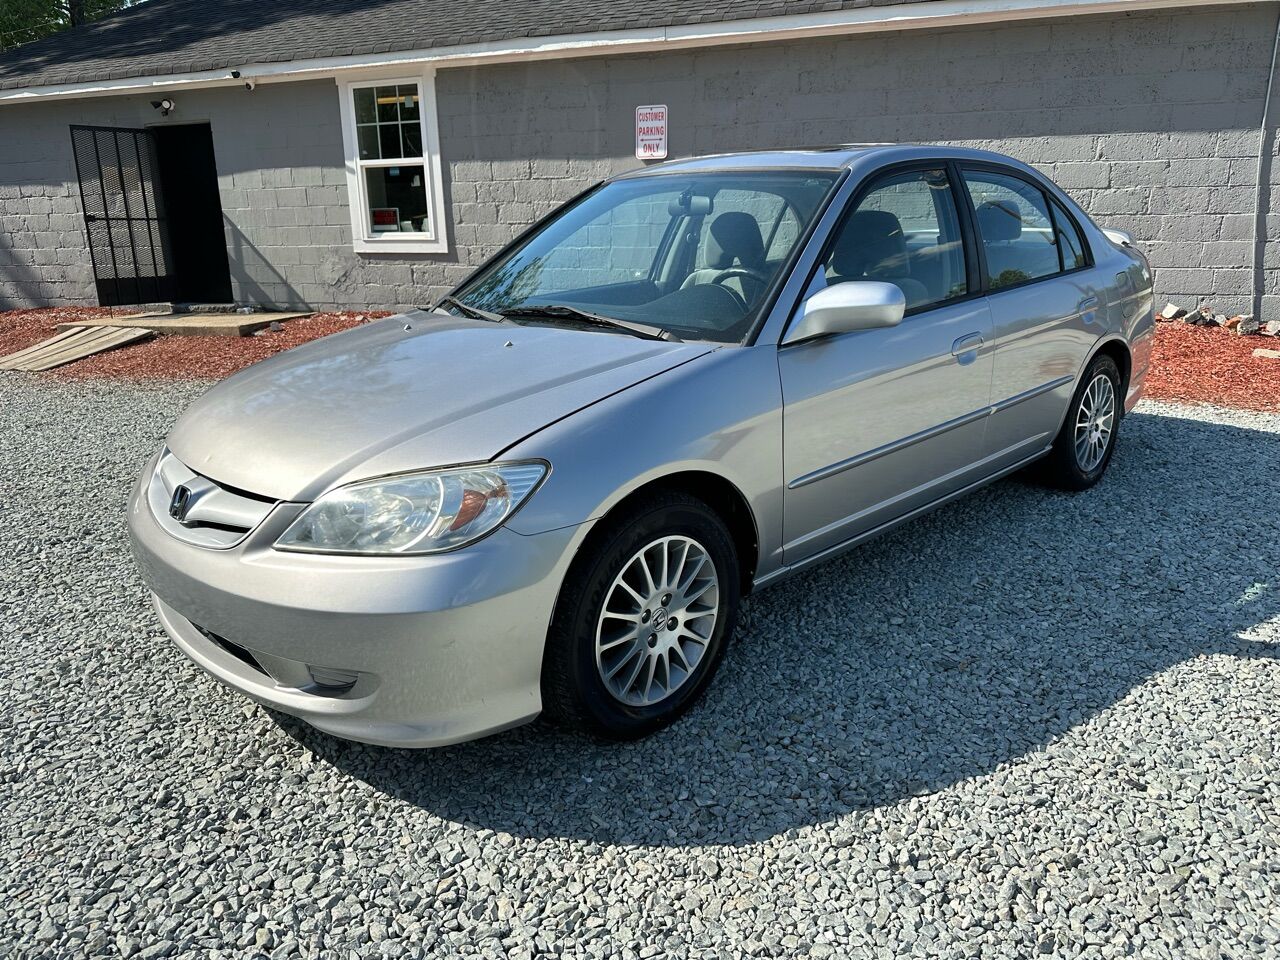 2005 Honda Civic For Sale - Carsforsale.com®